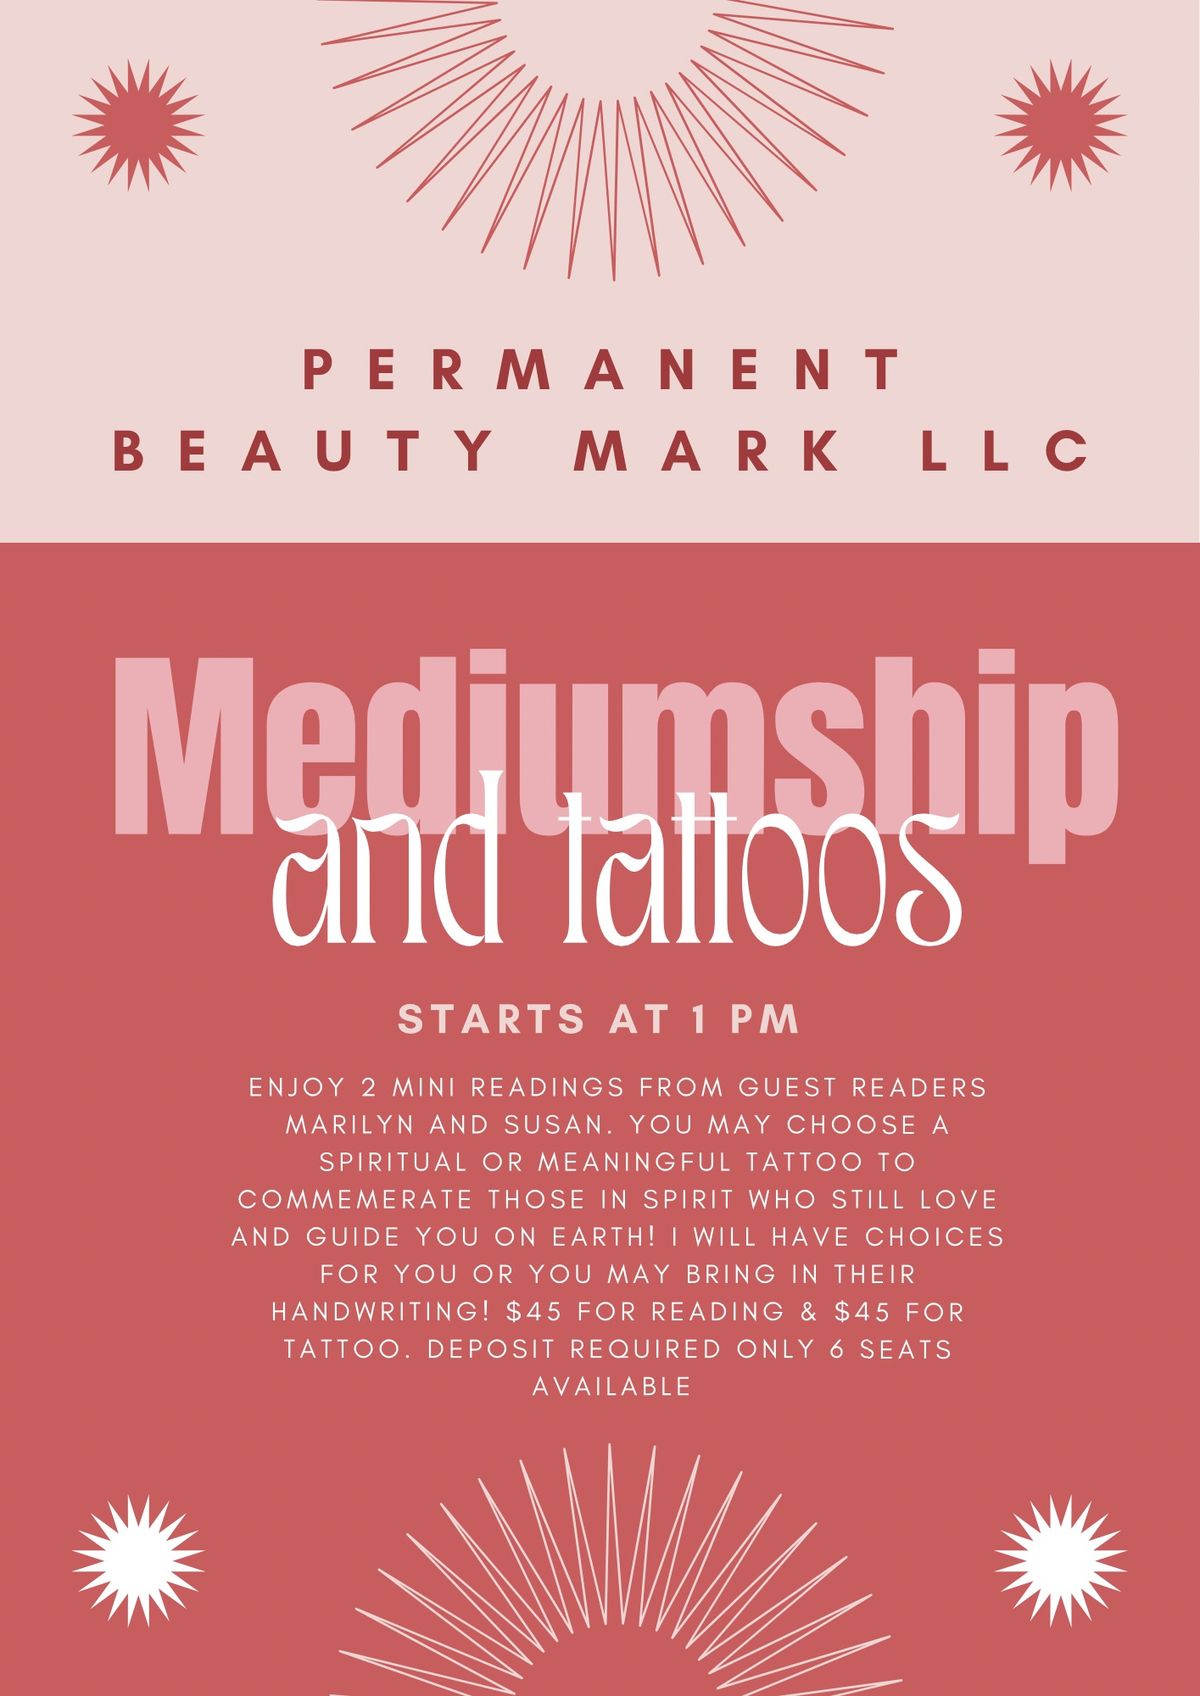 Mediumship and tattoos